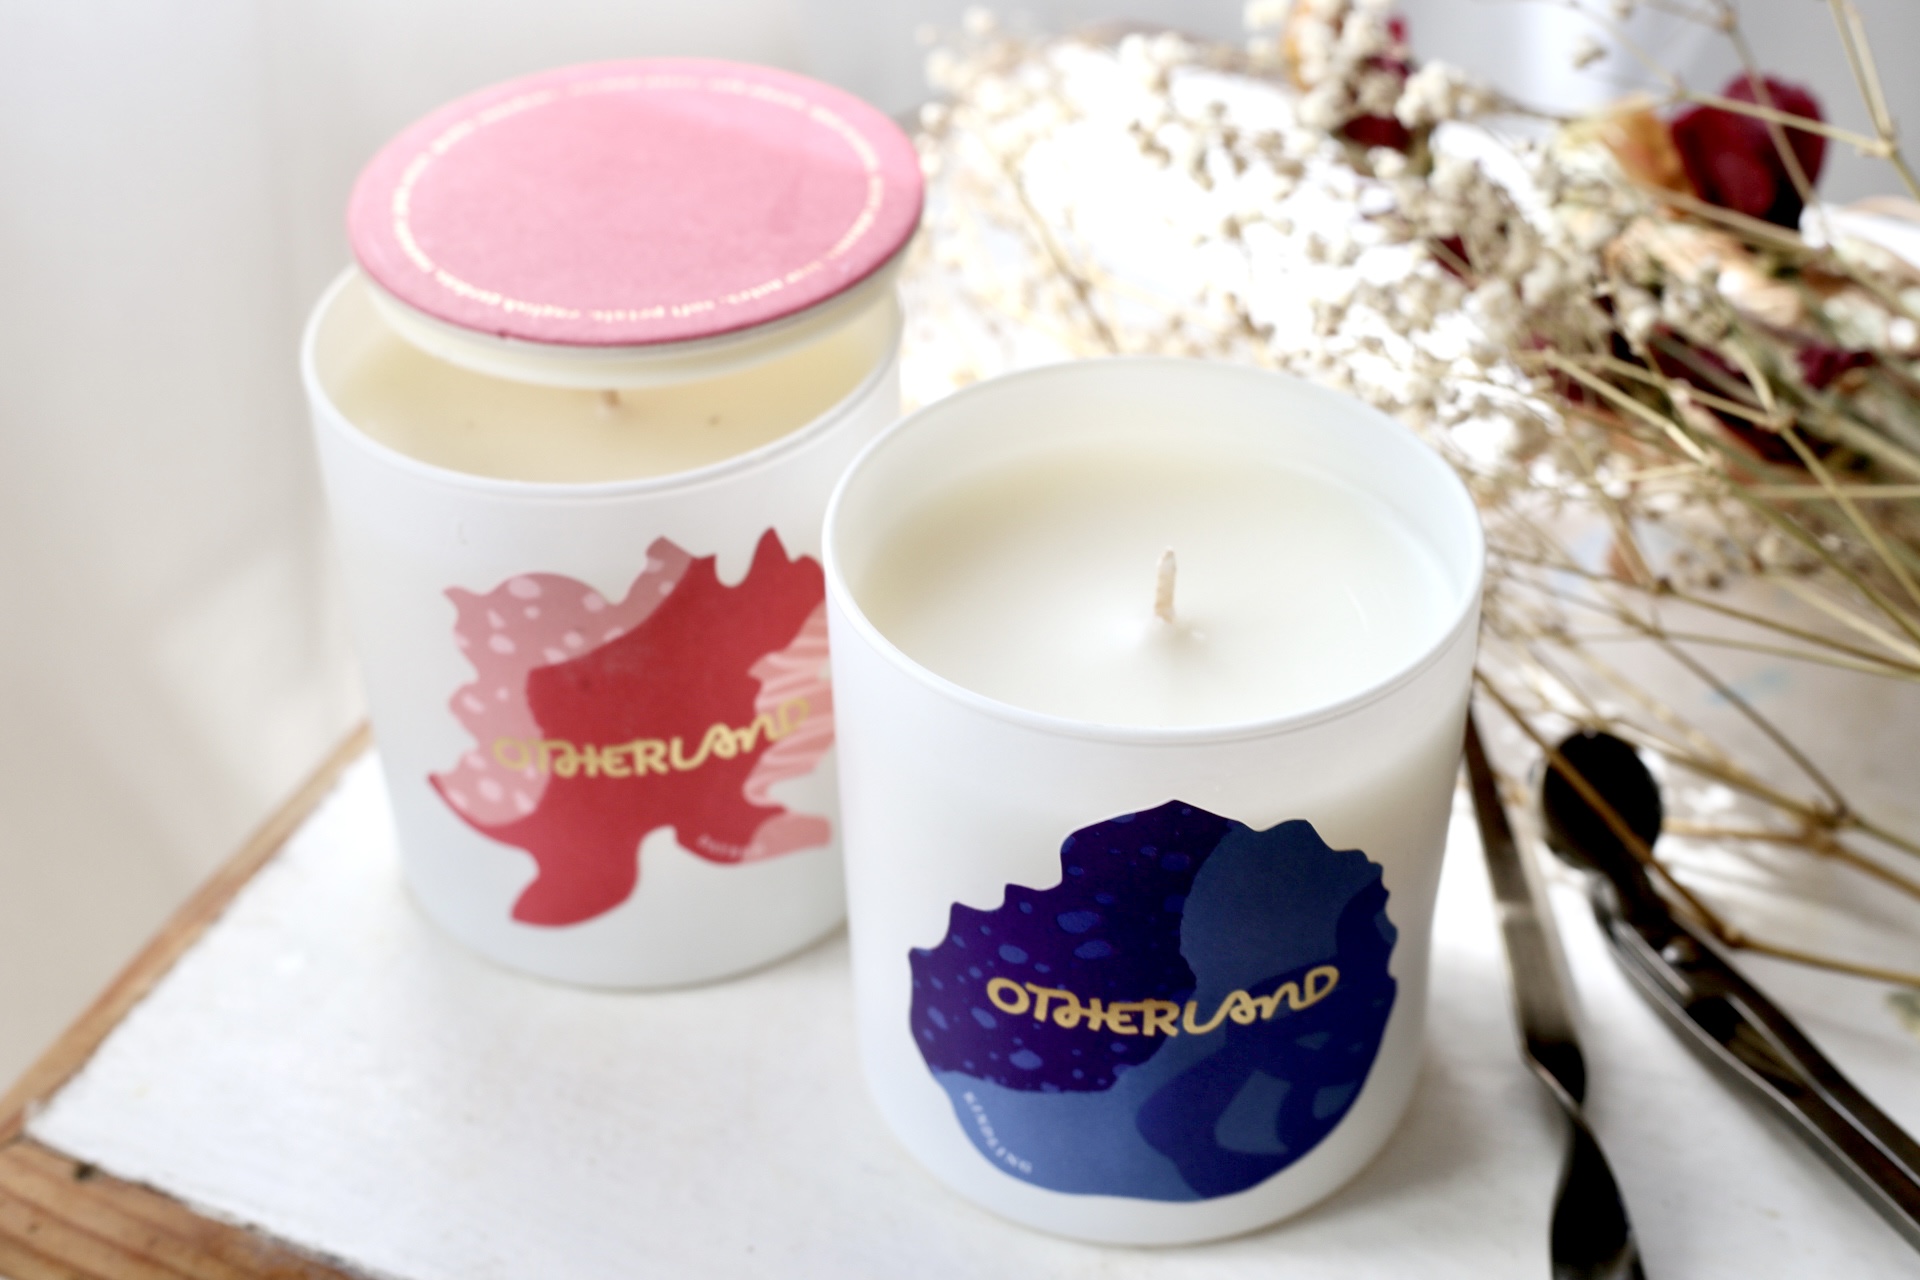 Otherland candle